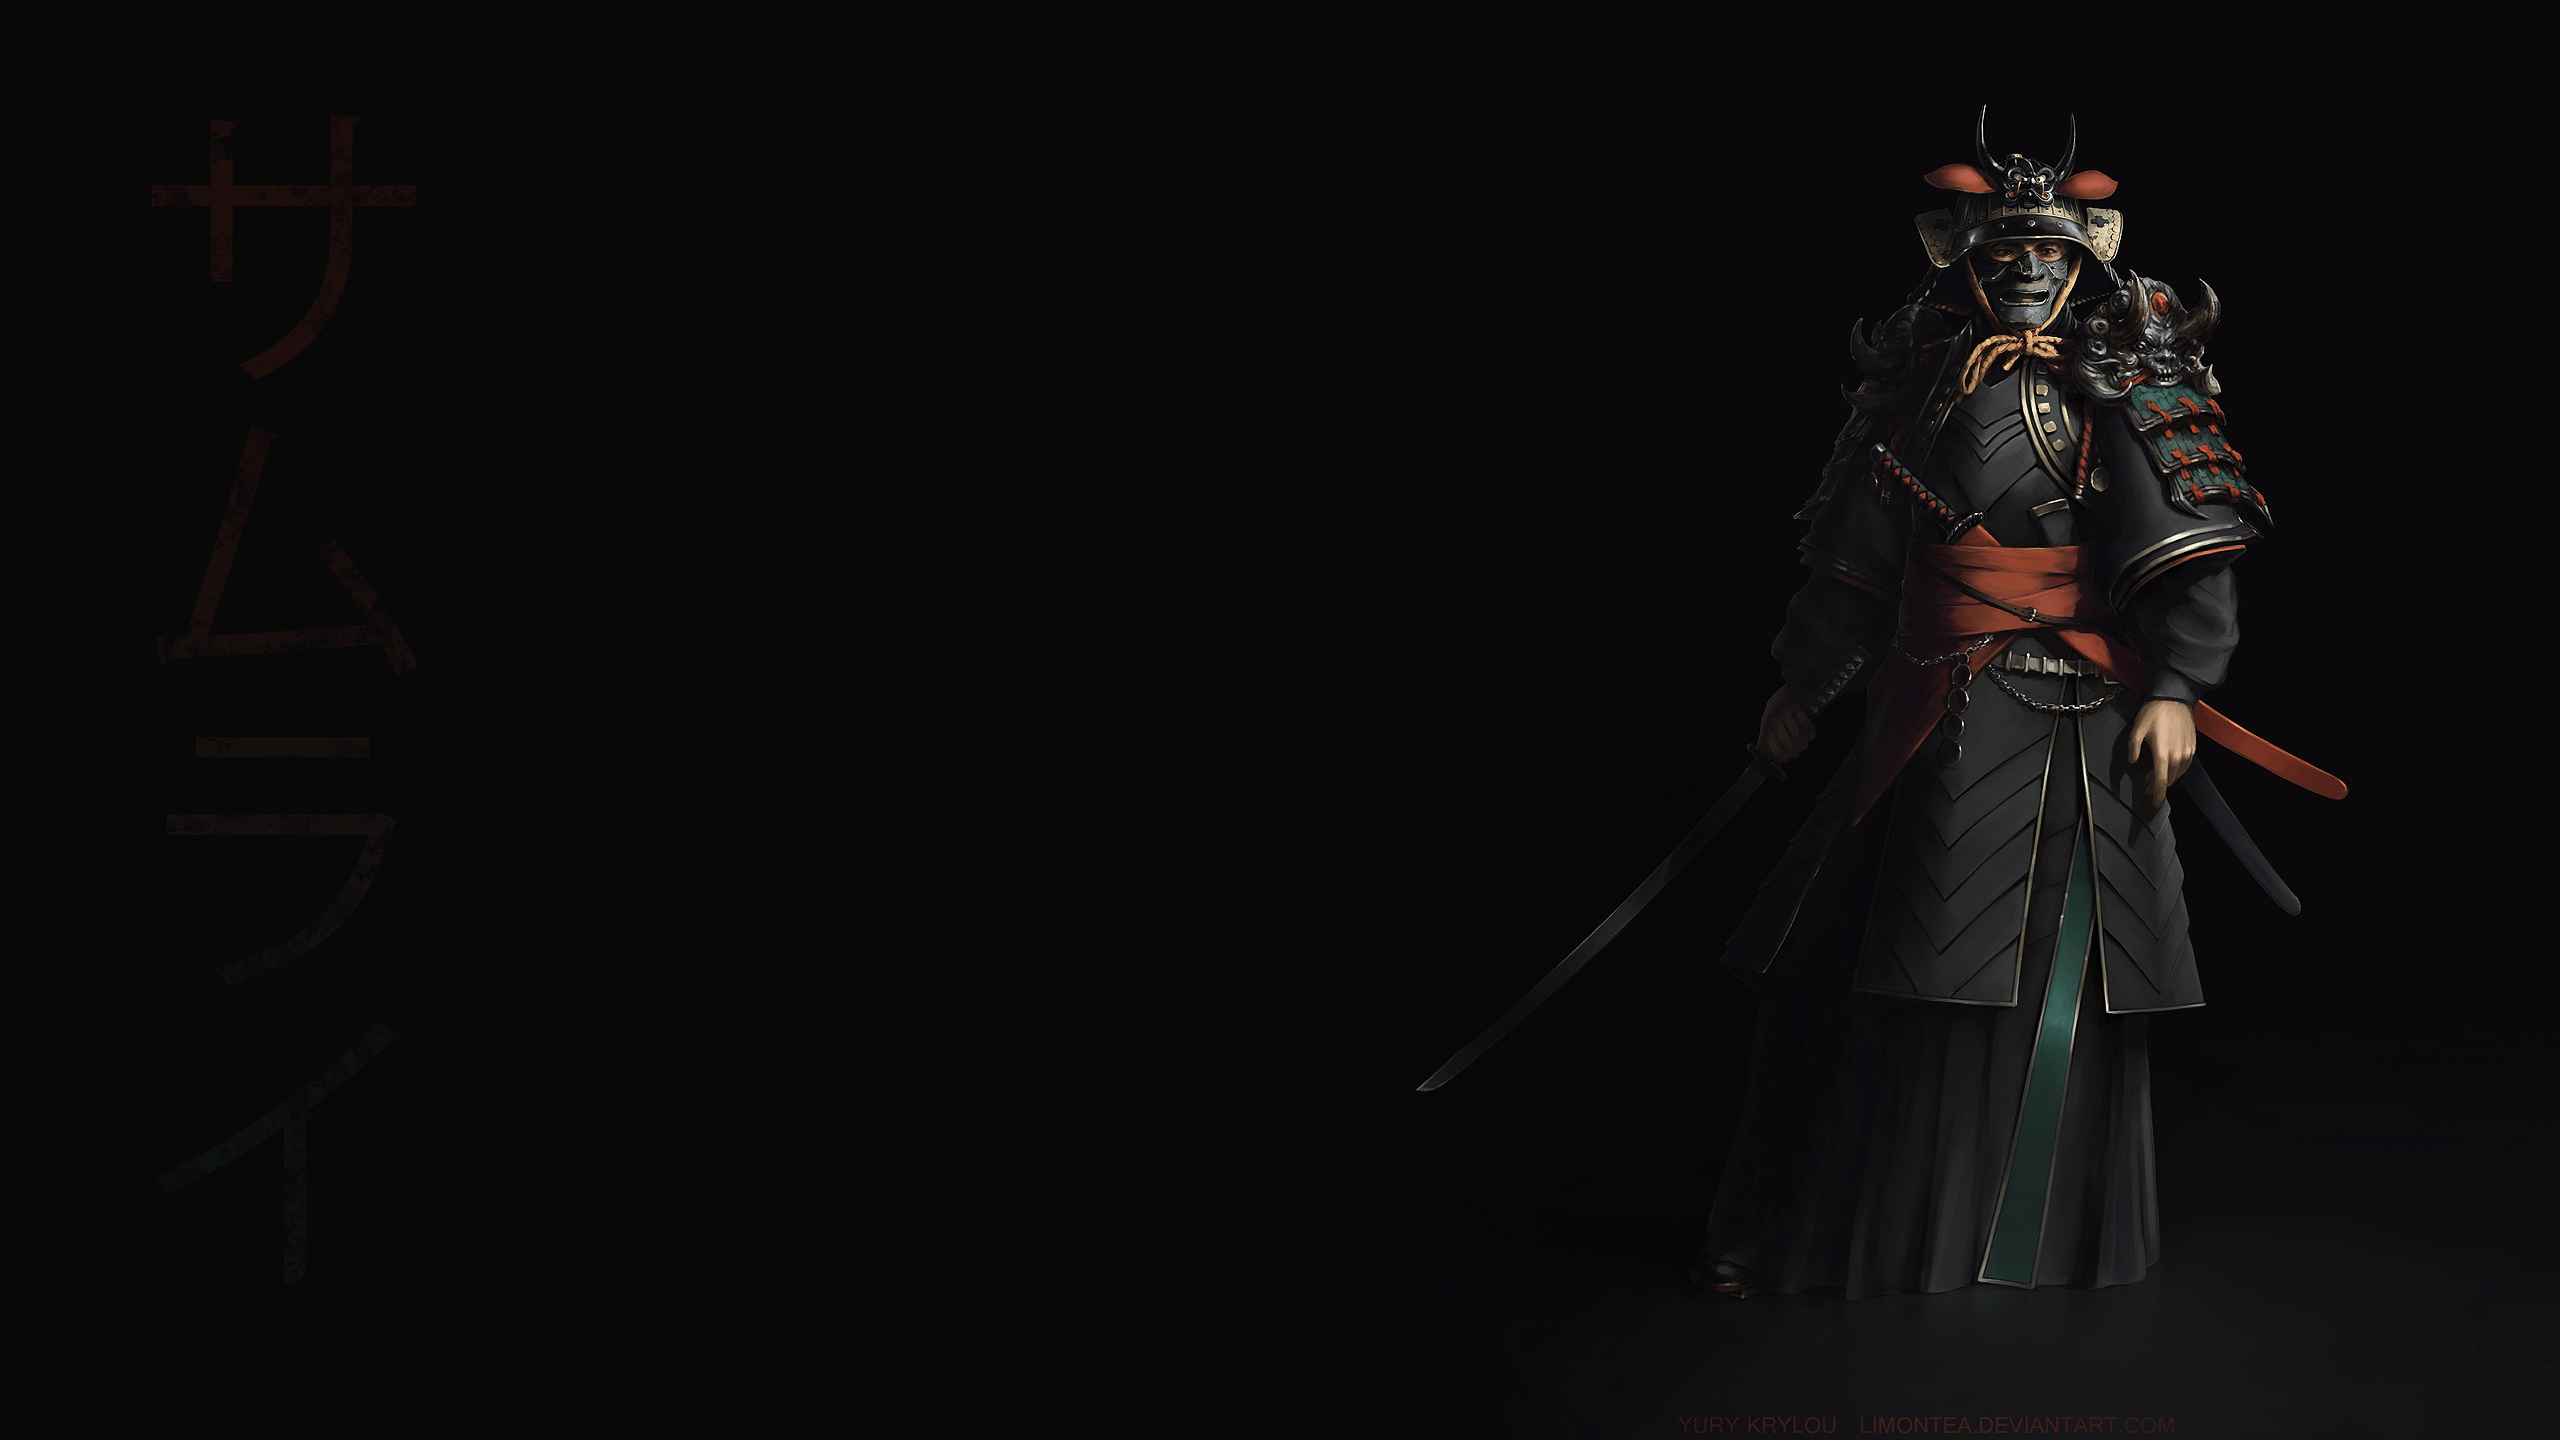 Samurai Minimal 4K Wallpapers